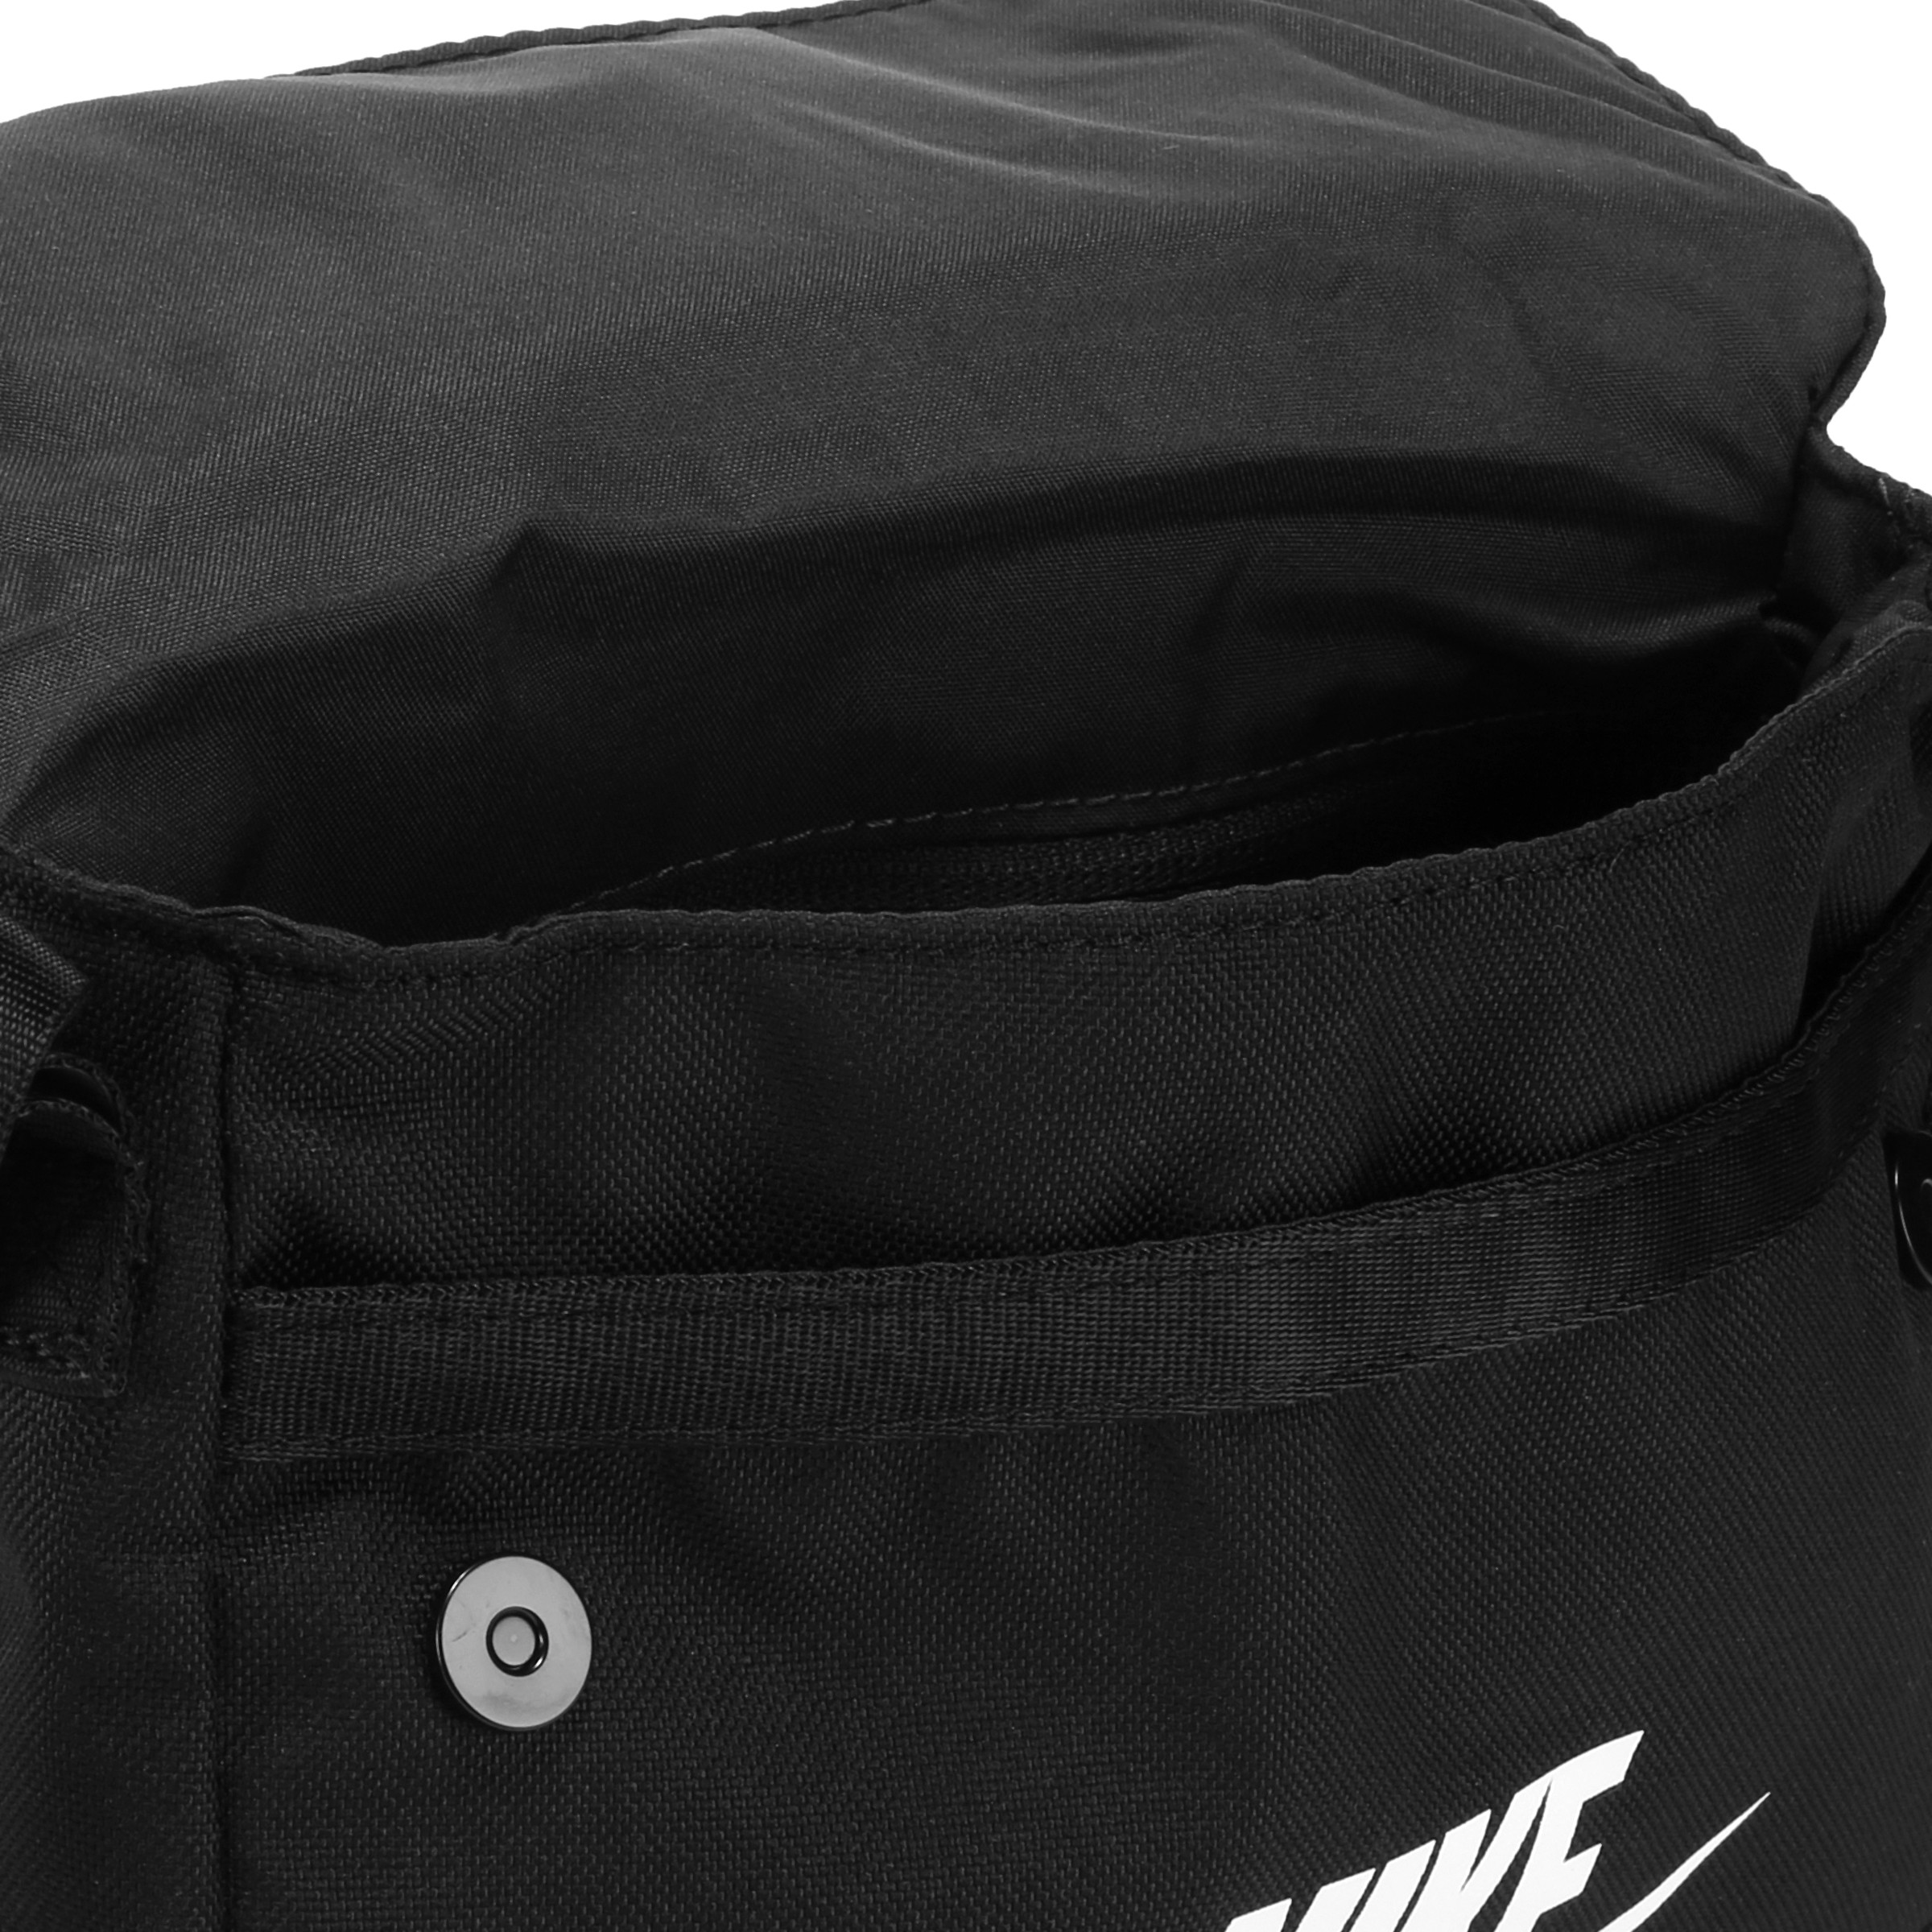 Nike Sportswear FUTURA 365 CROSSBODY UNISEX - Across body bag - archaeo  brown/black/white/brown 